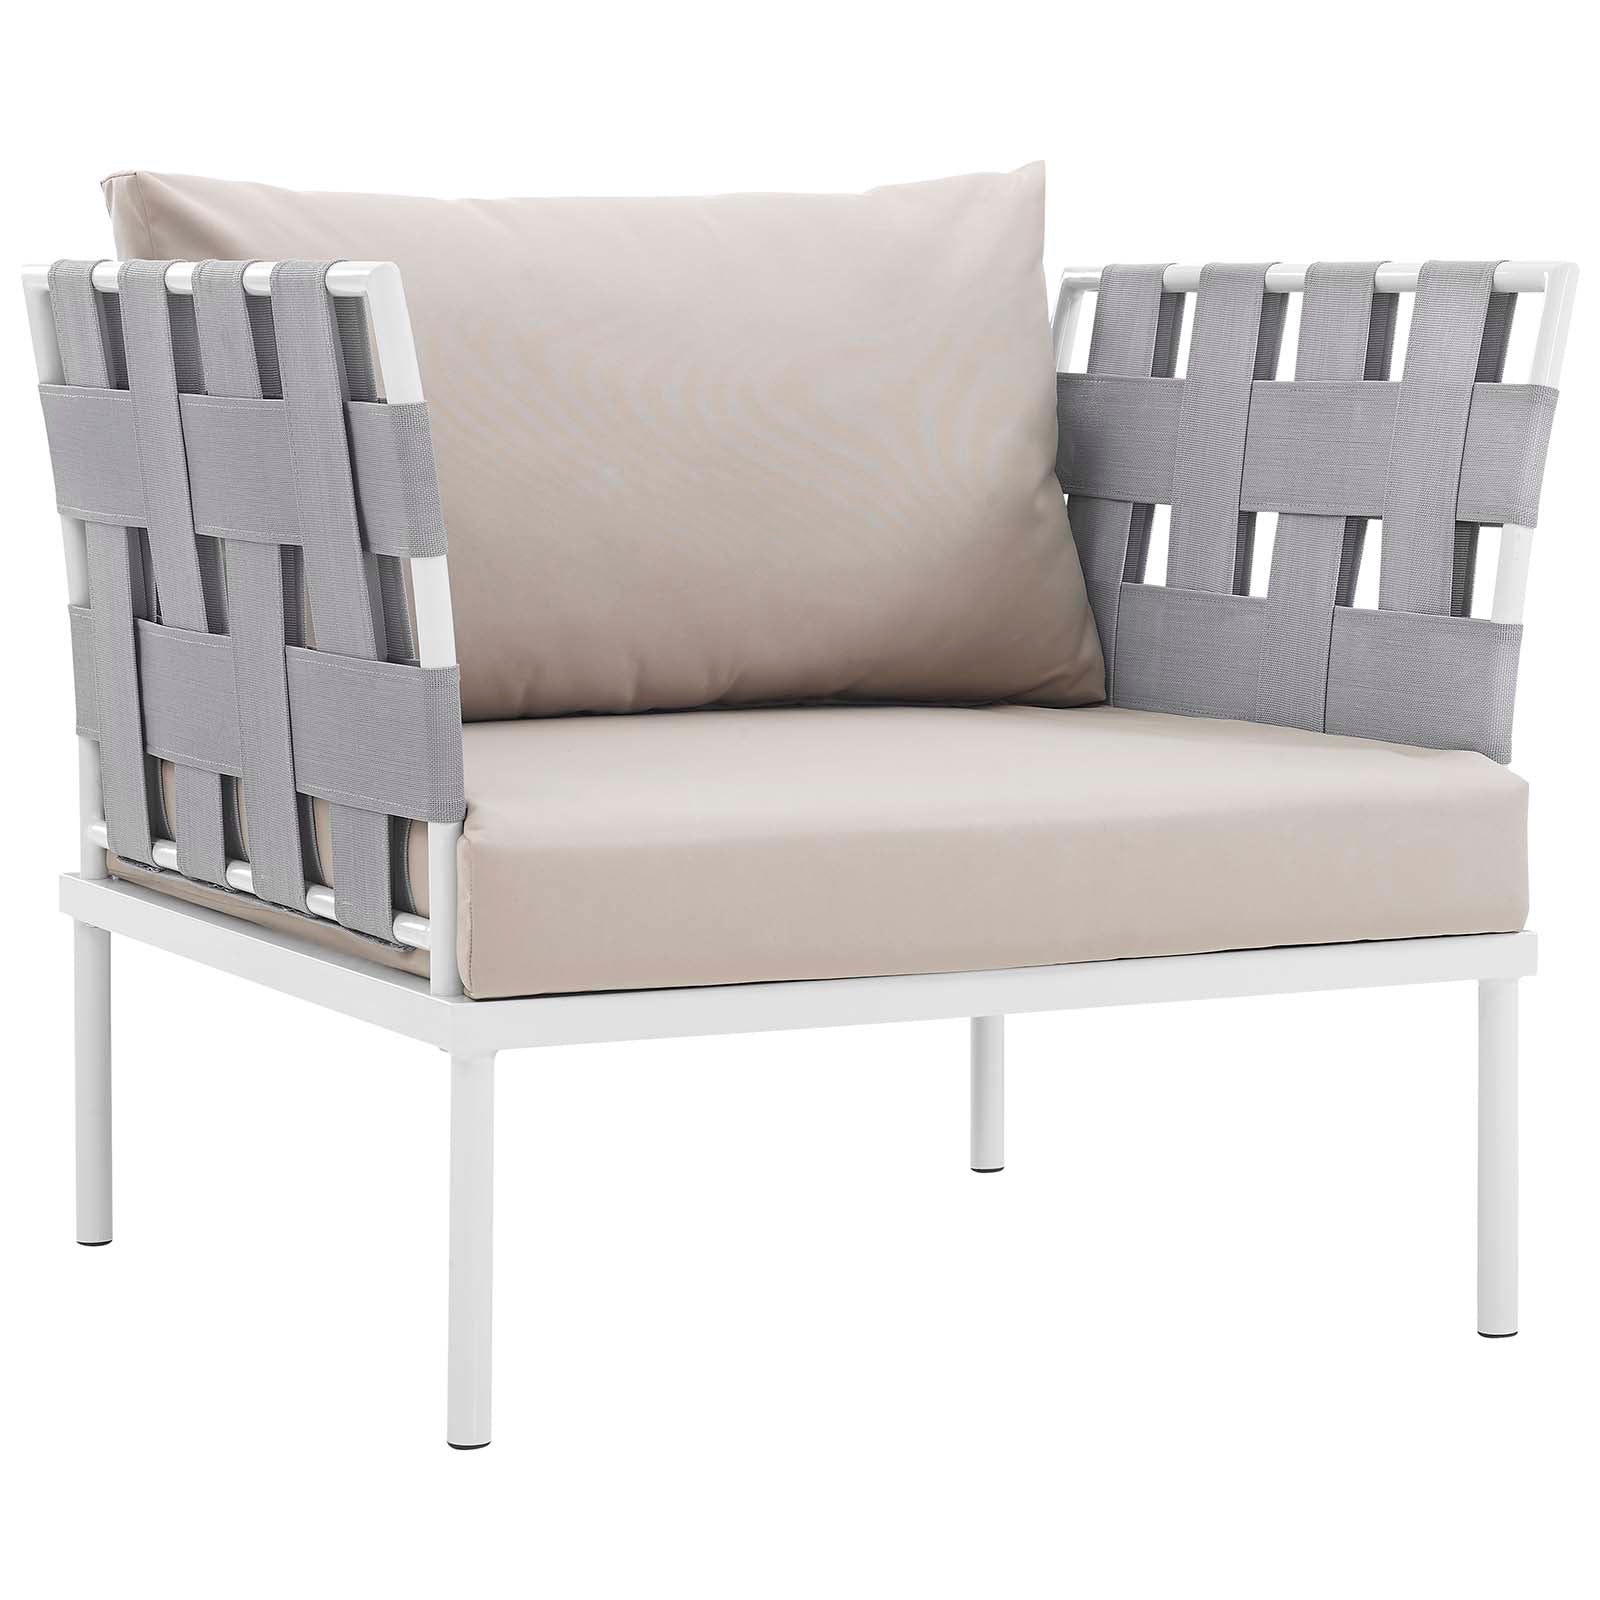 Modway Outdoor Conversation Sets - Harmony 10 Piece Outdoor Patio Aluminum Sectional Sofa Set White Beige